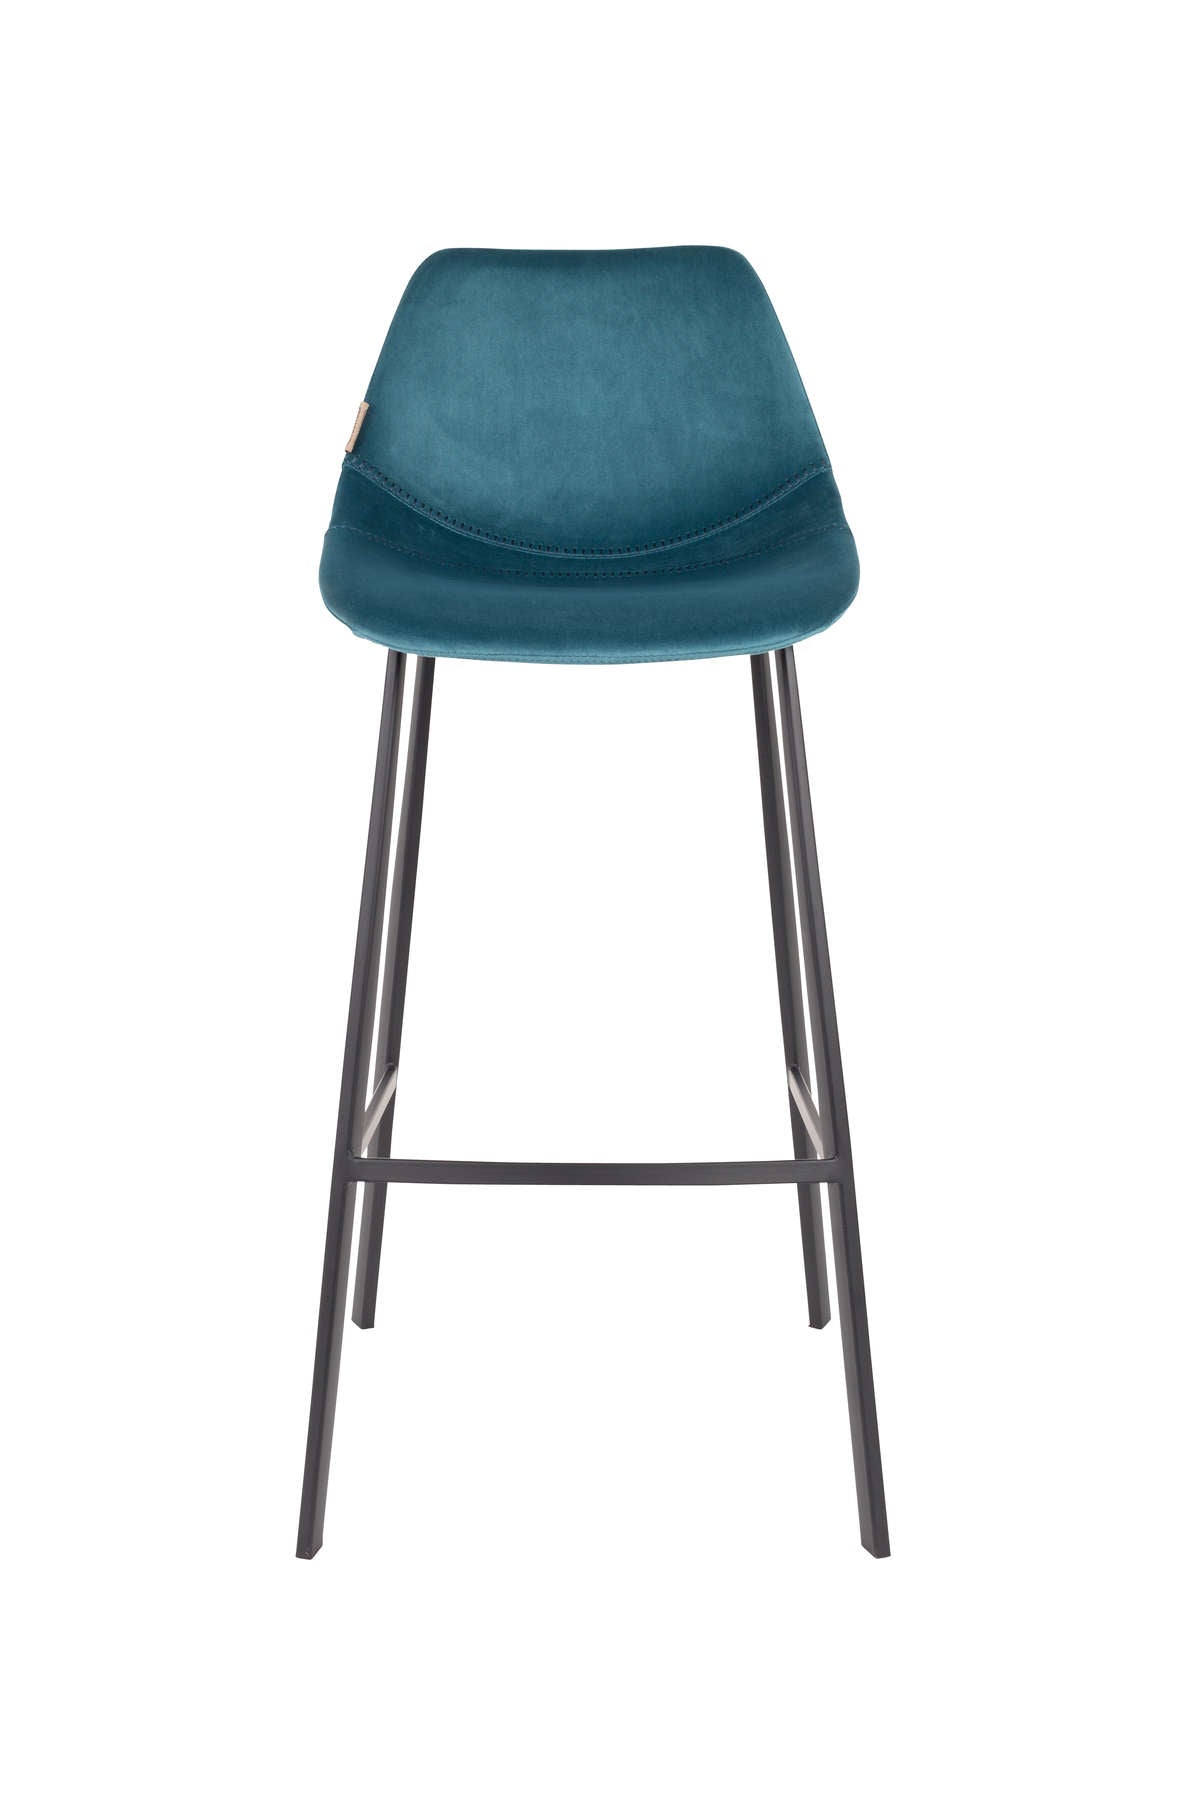 FRANKY bar stool 80 blue, Dutchbone, Eye on Design